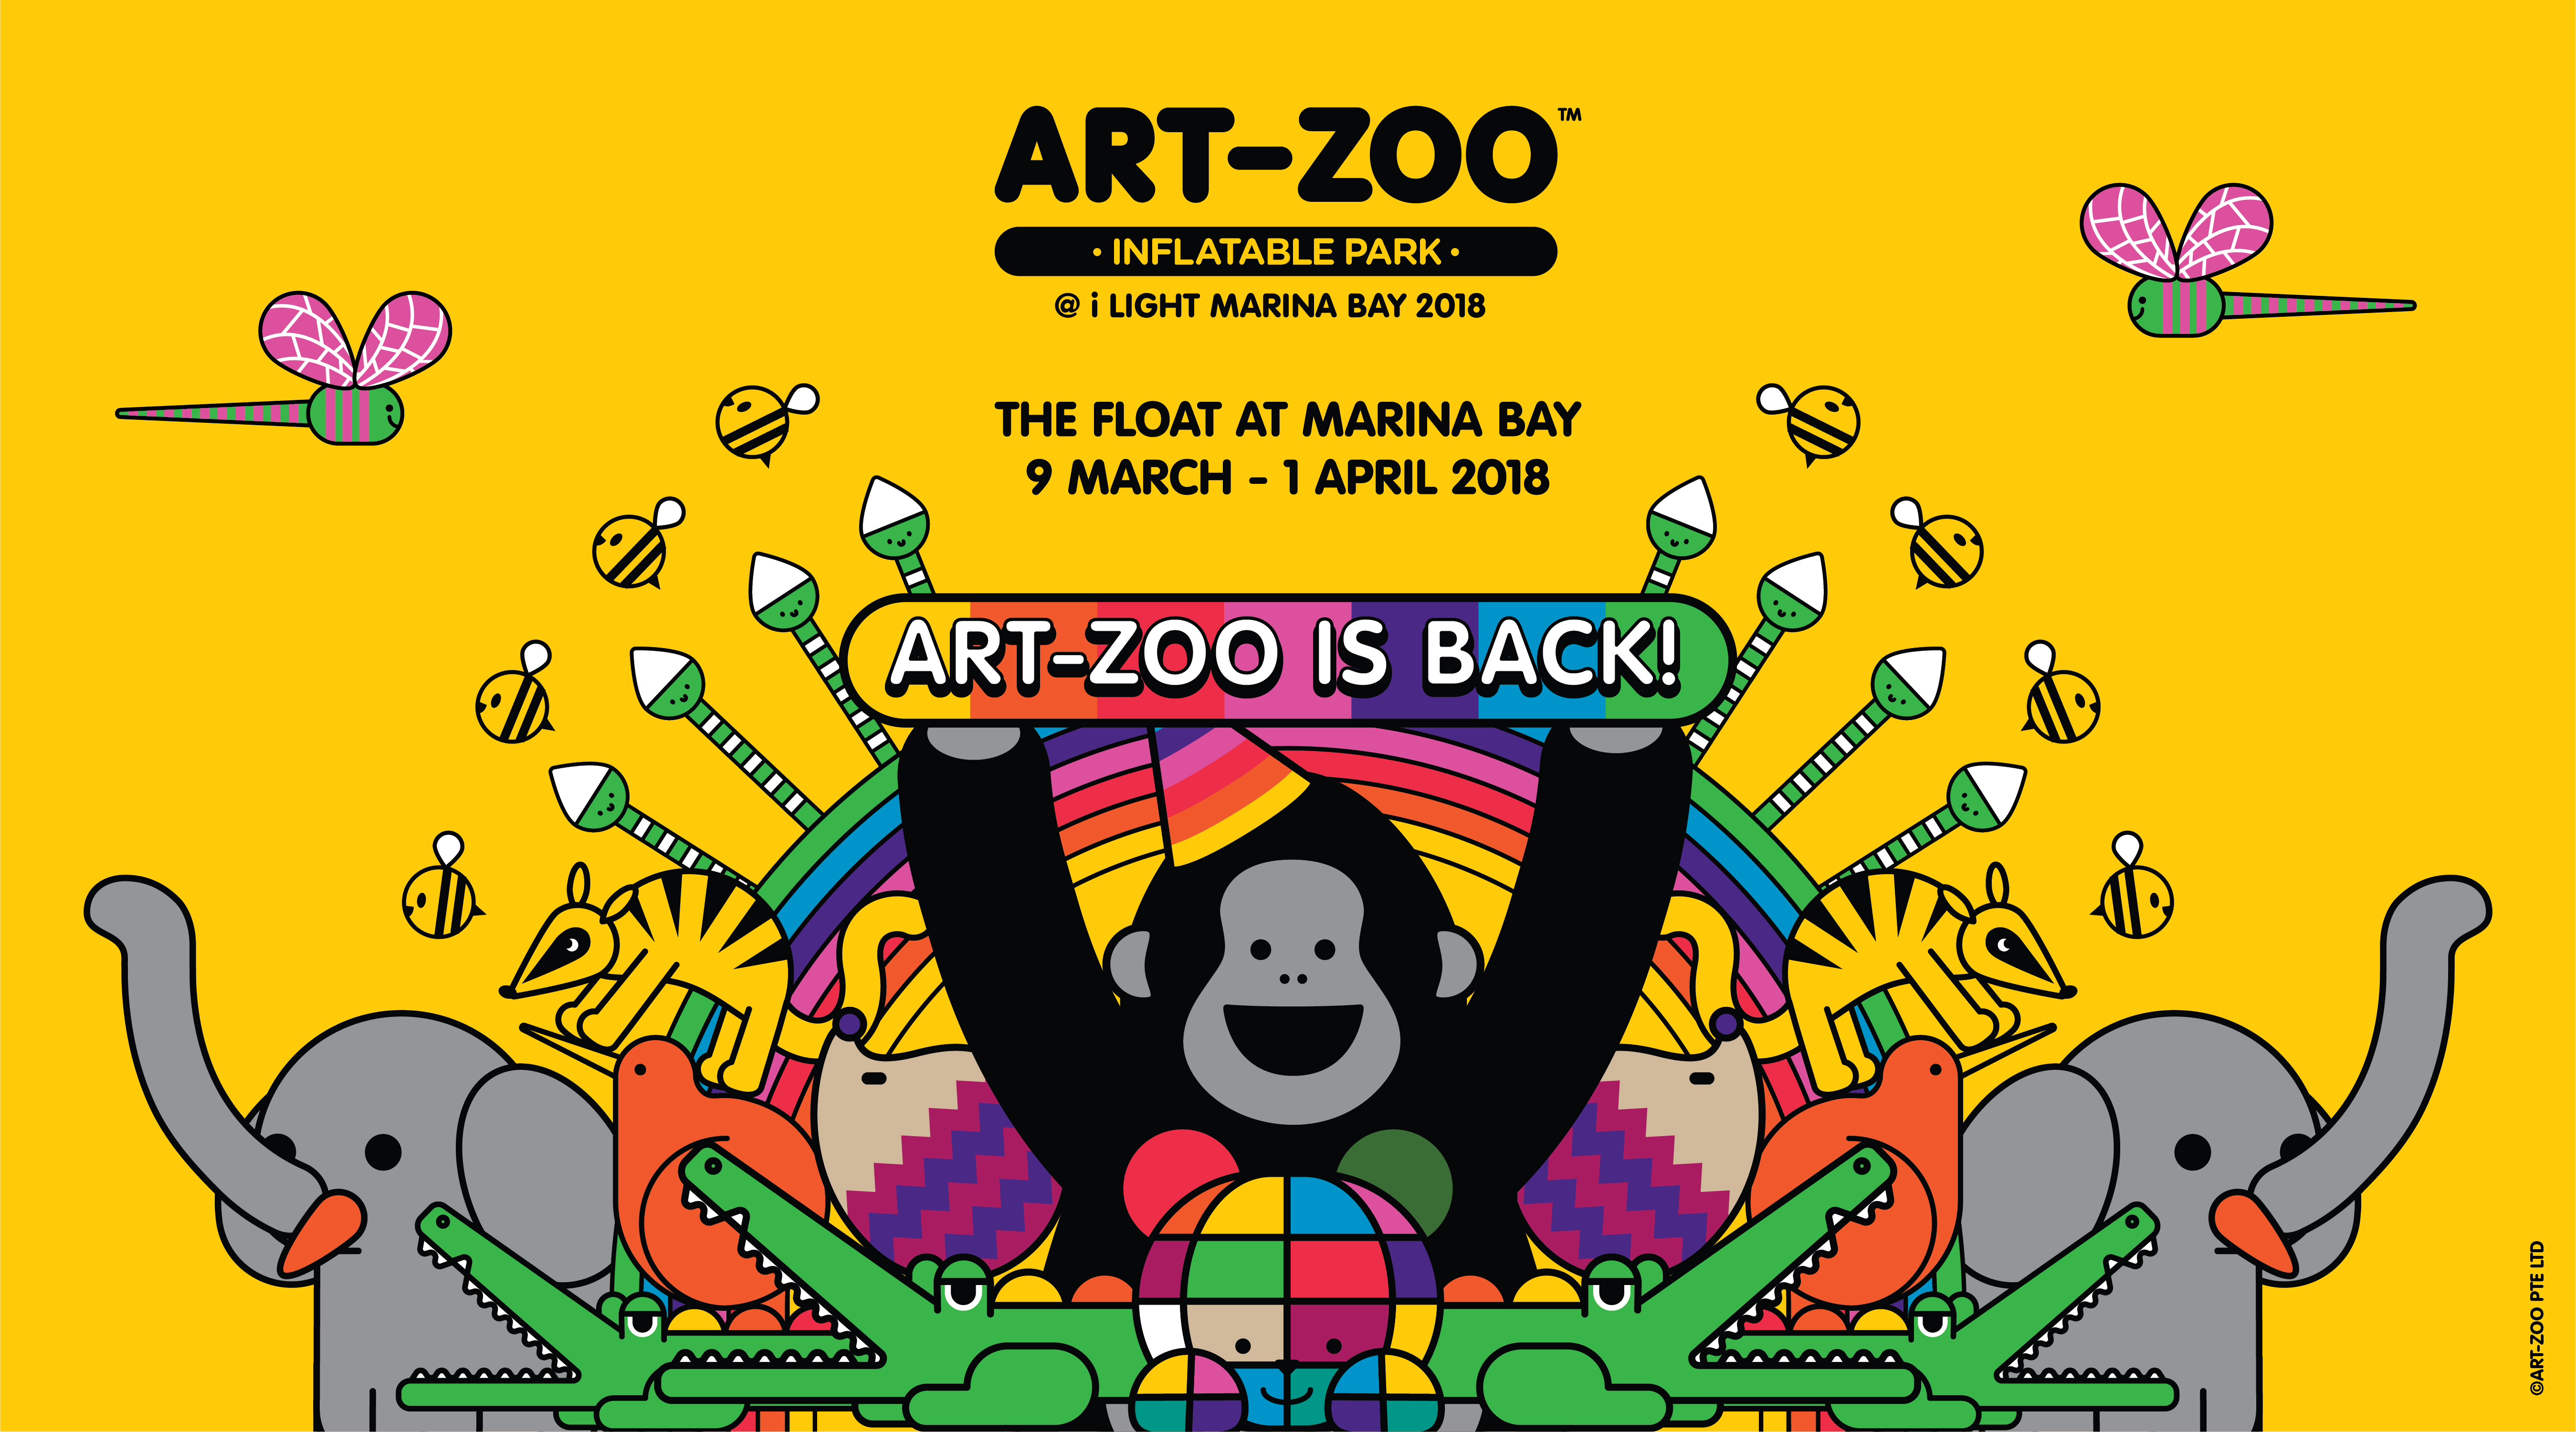 Art-Zoo Inflatable Park key visual